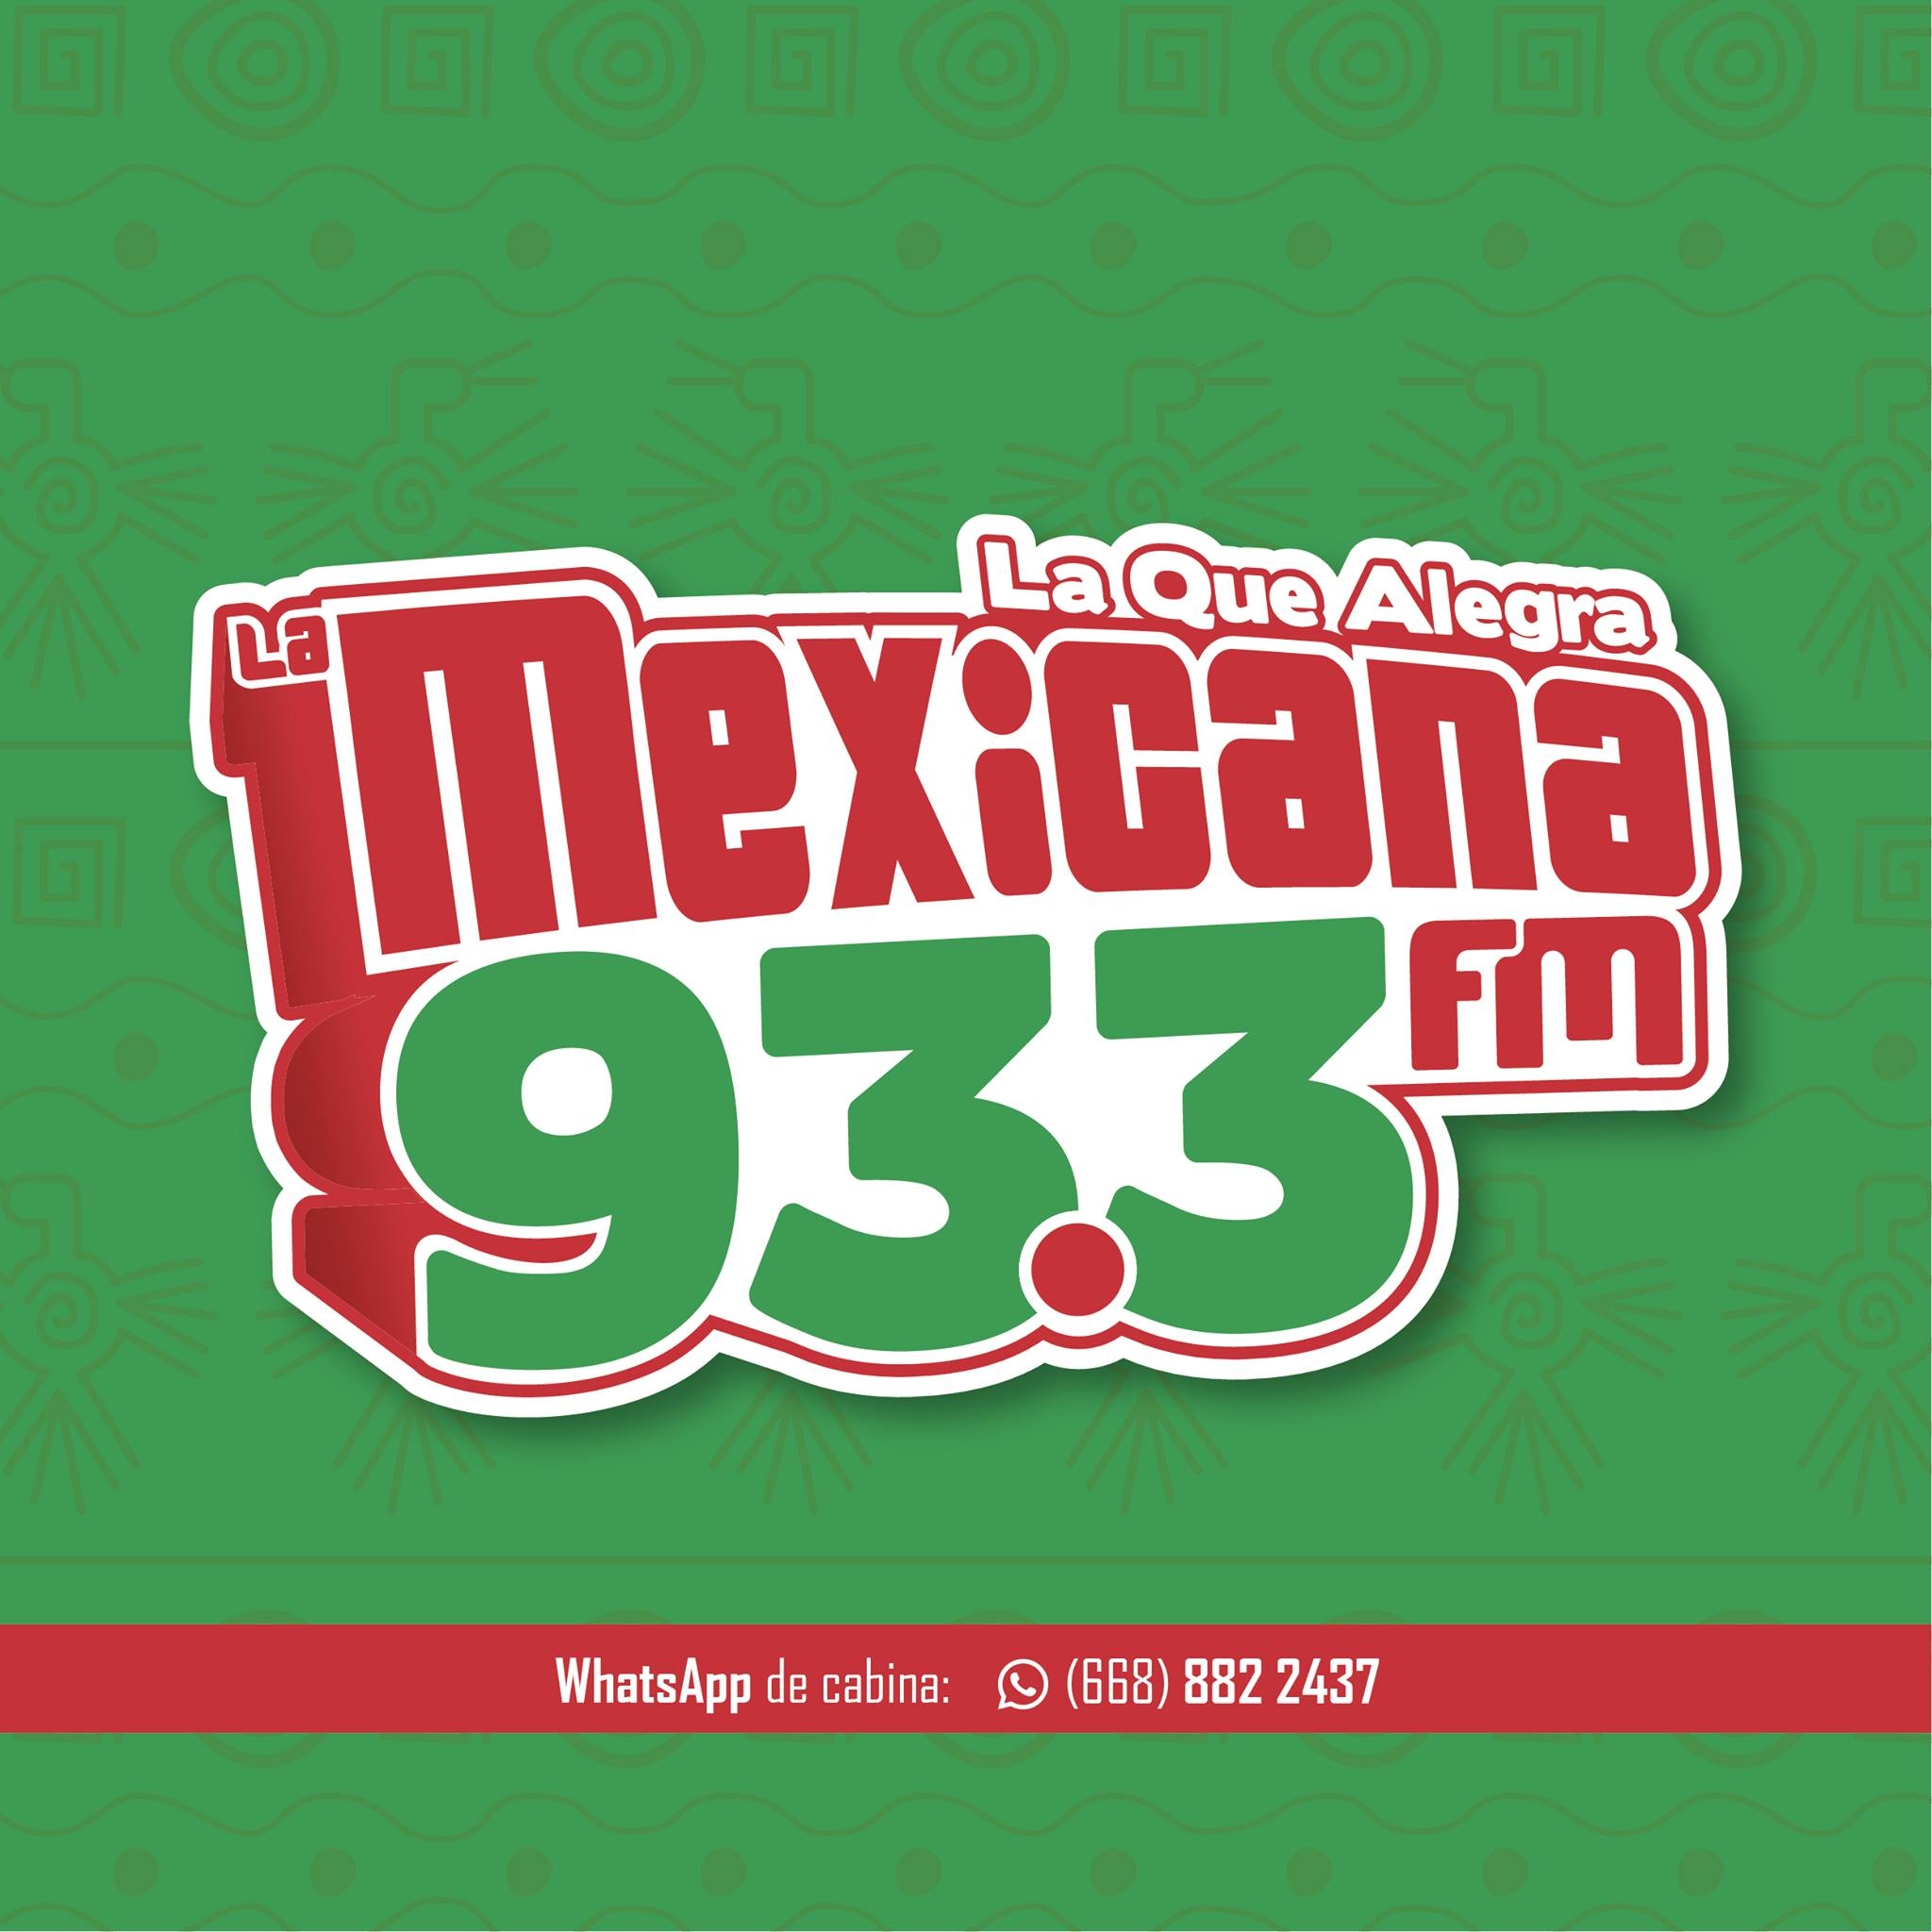 La Mexicana 93.3 fm en vivo online